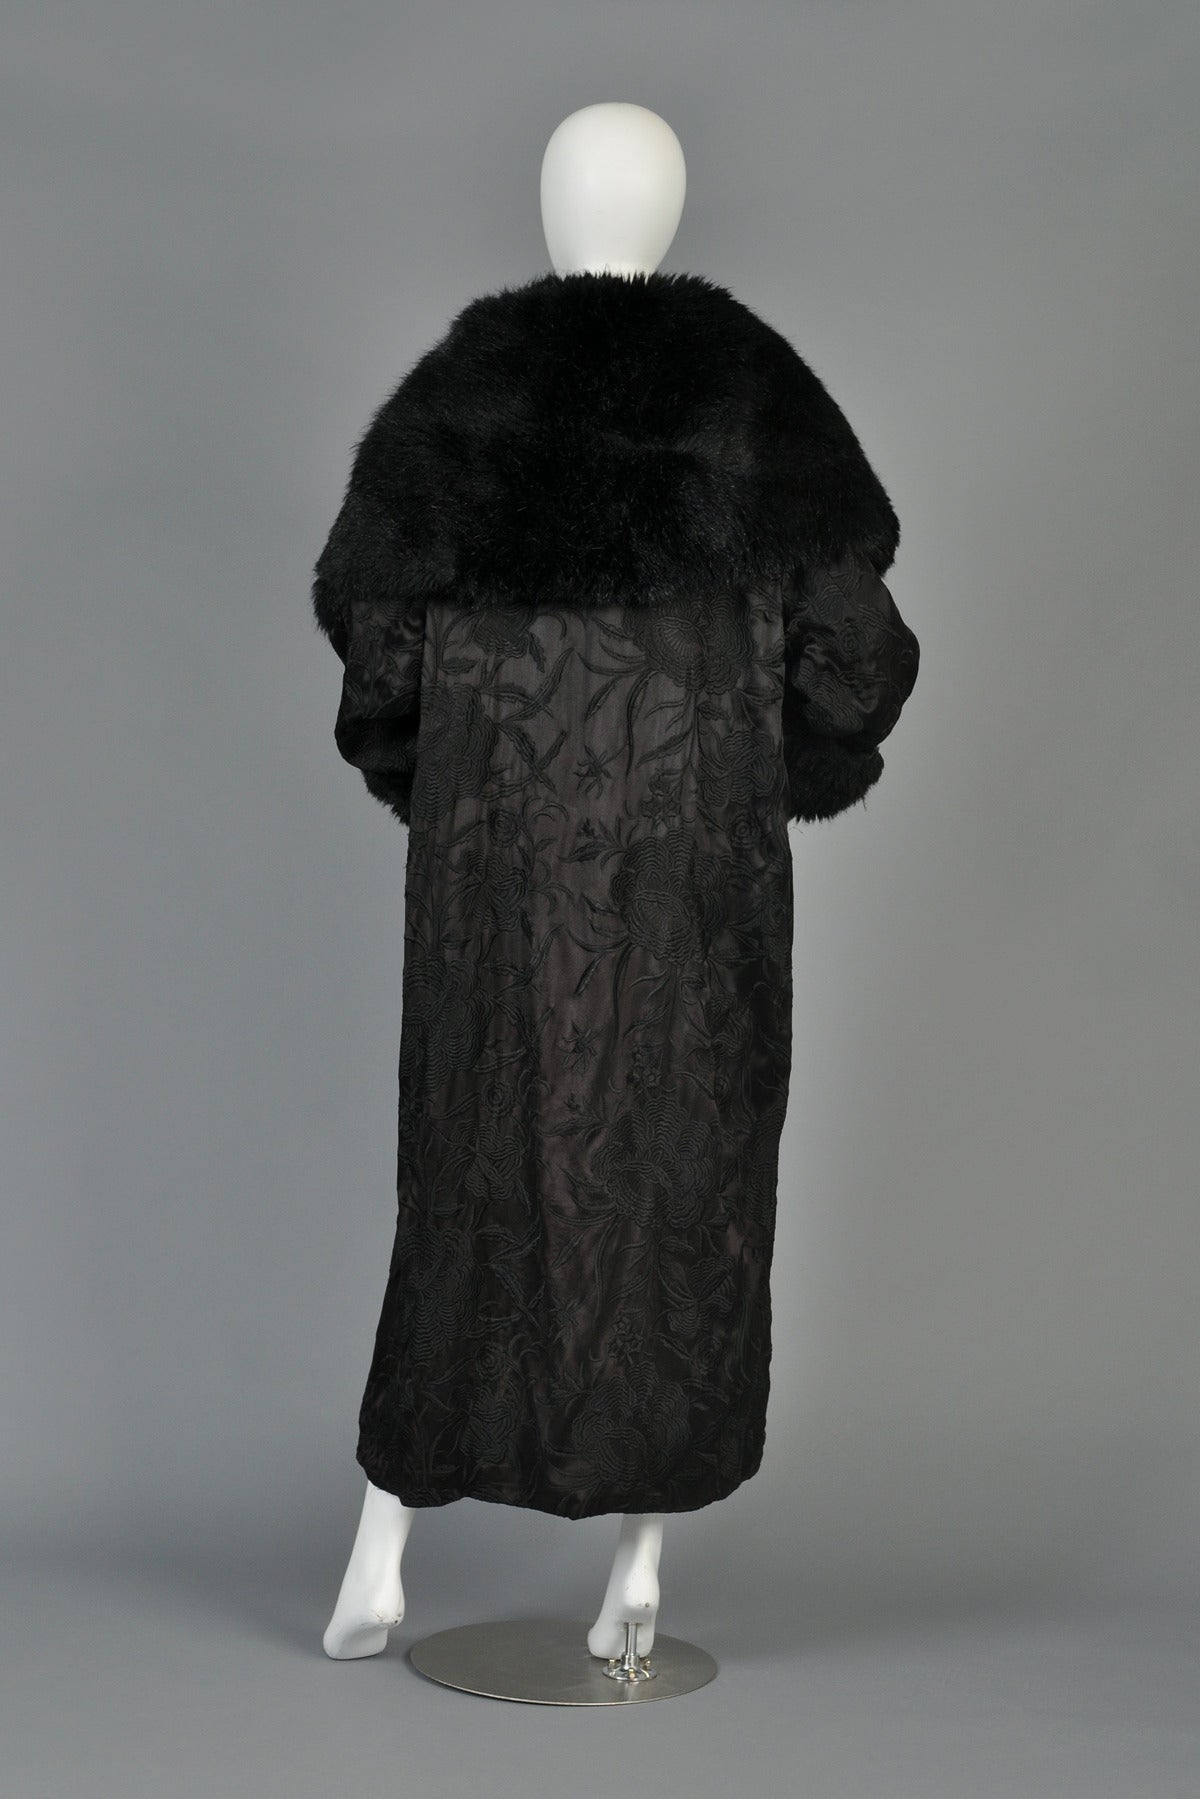 Norma Kamali Embroidered Satin Coat with MASSIVE Fur-lined Hood 6